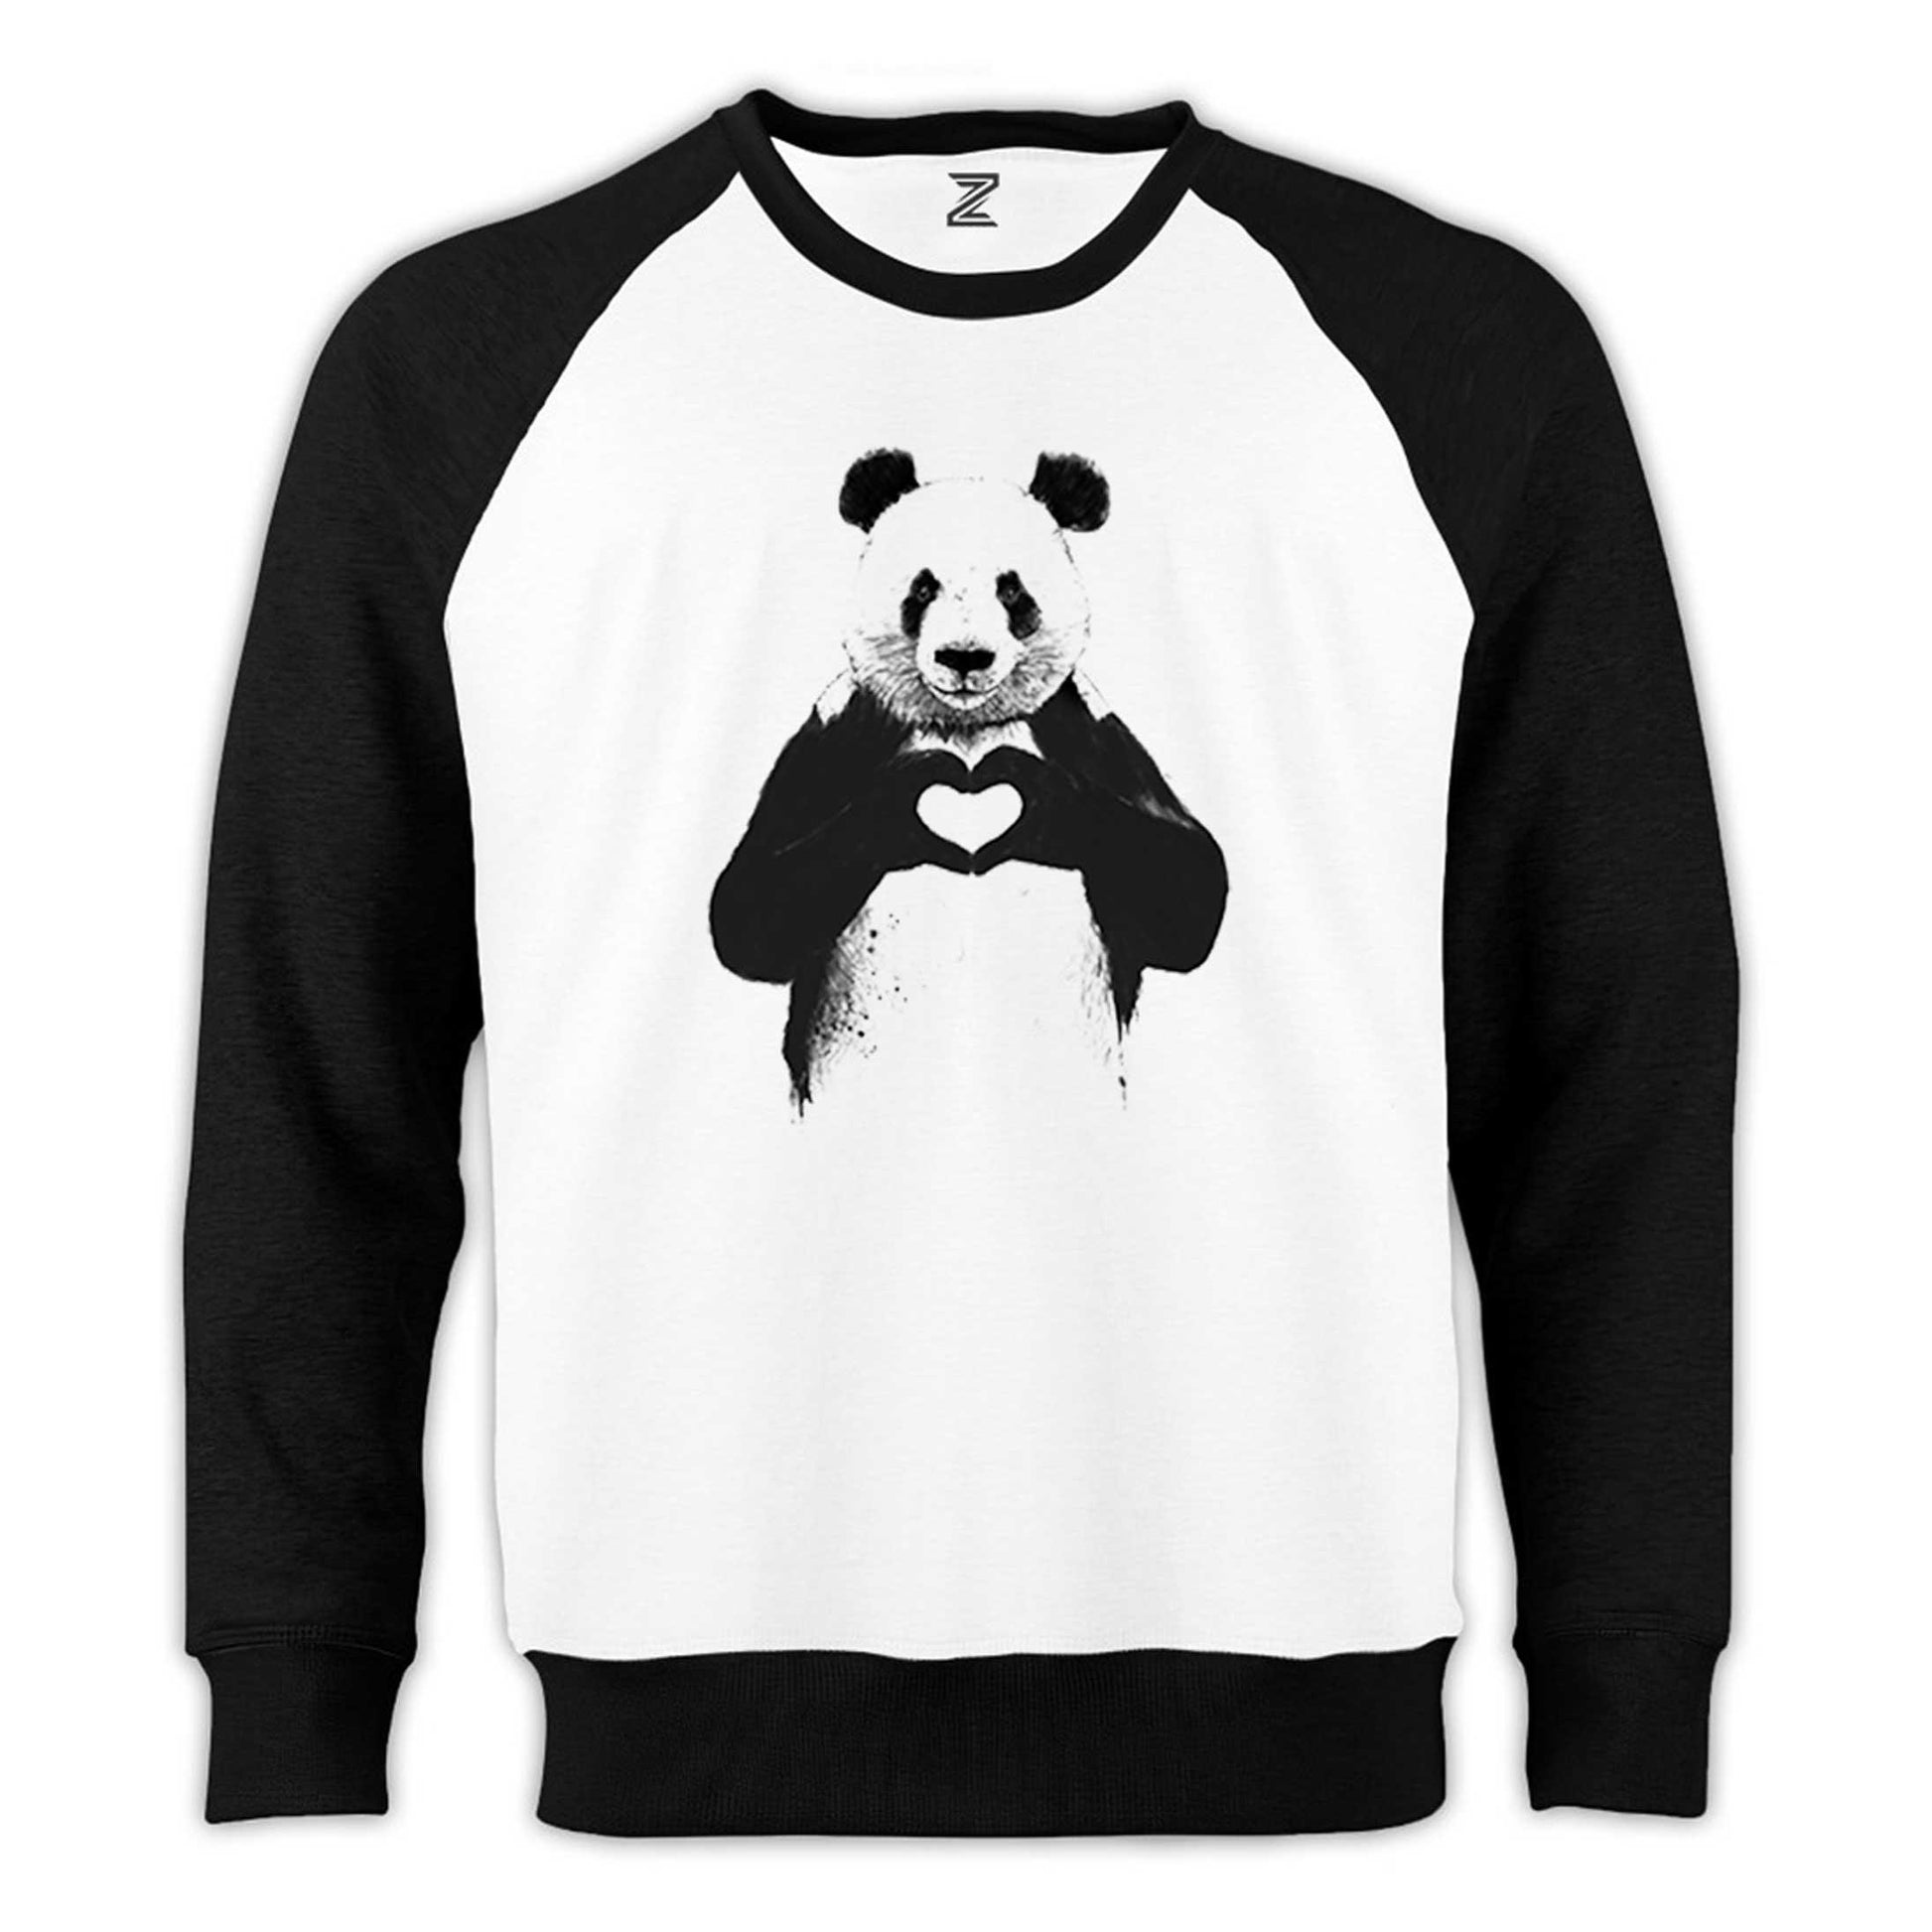 Panda Love Reglan Kol Beyaz Sweatshirt - Zepplingiyim